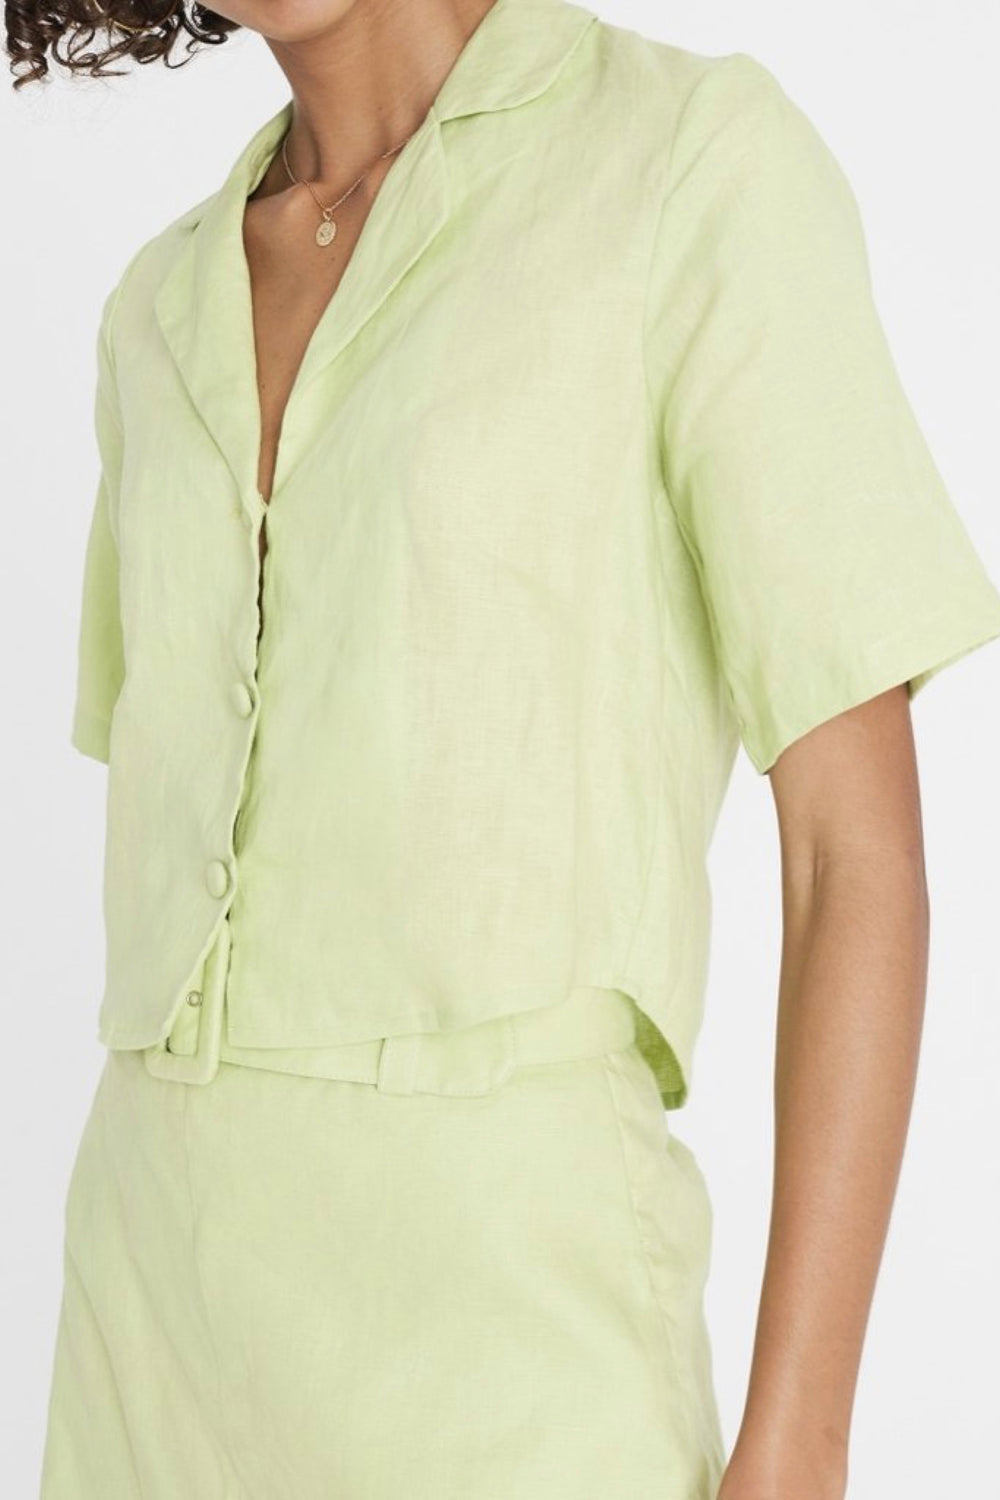 Avocado Green Chaumont Shirt